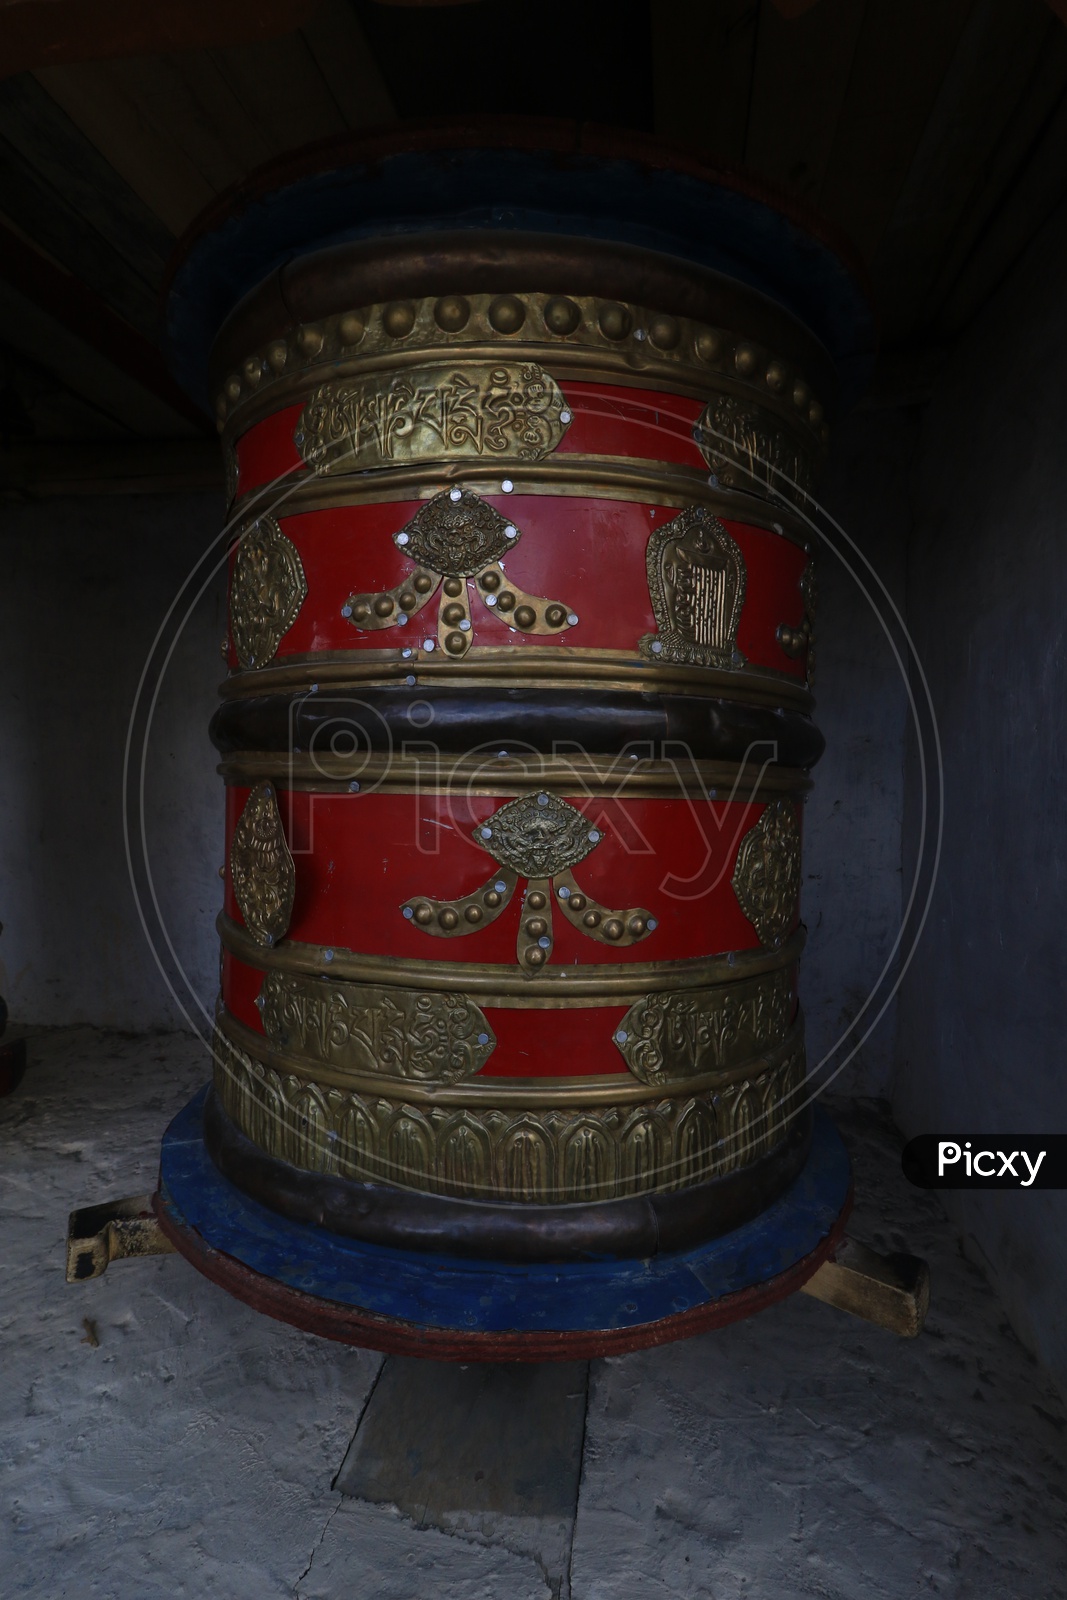 Tibetian Prayer Bells in Buddhist Temples